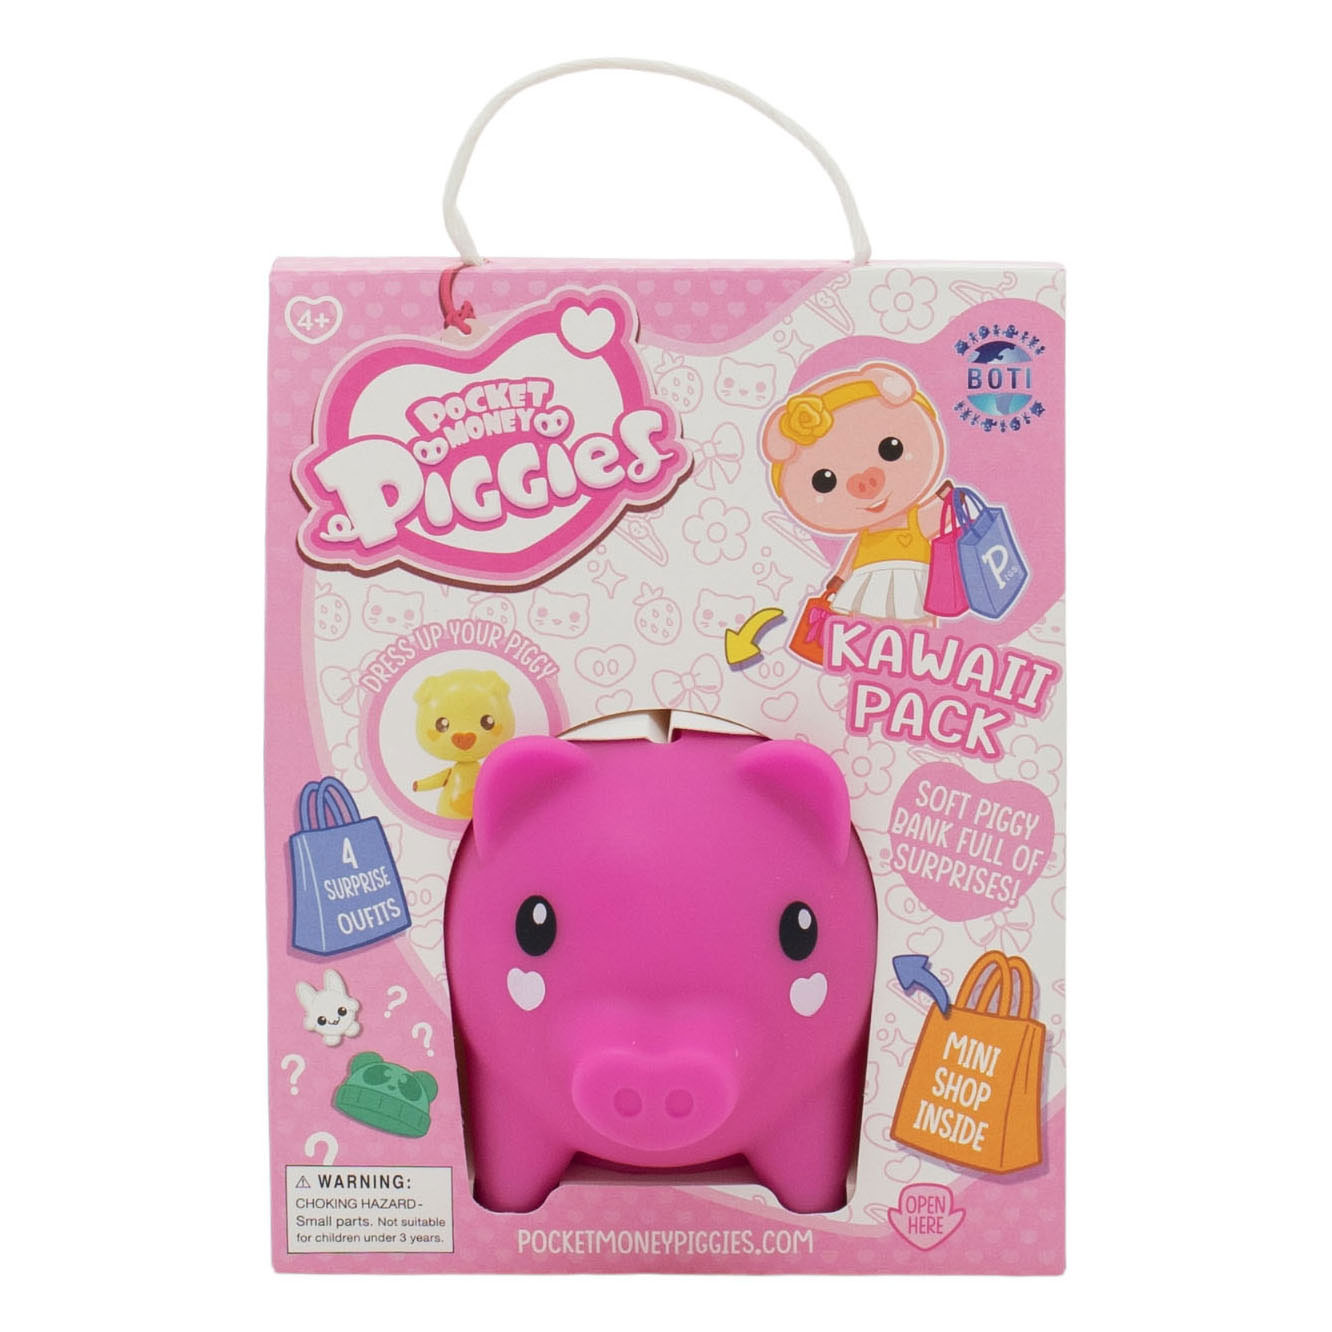 Pockey Money Piggies jouant une figurine avec une tirelire - Pack Kawaii